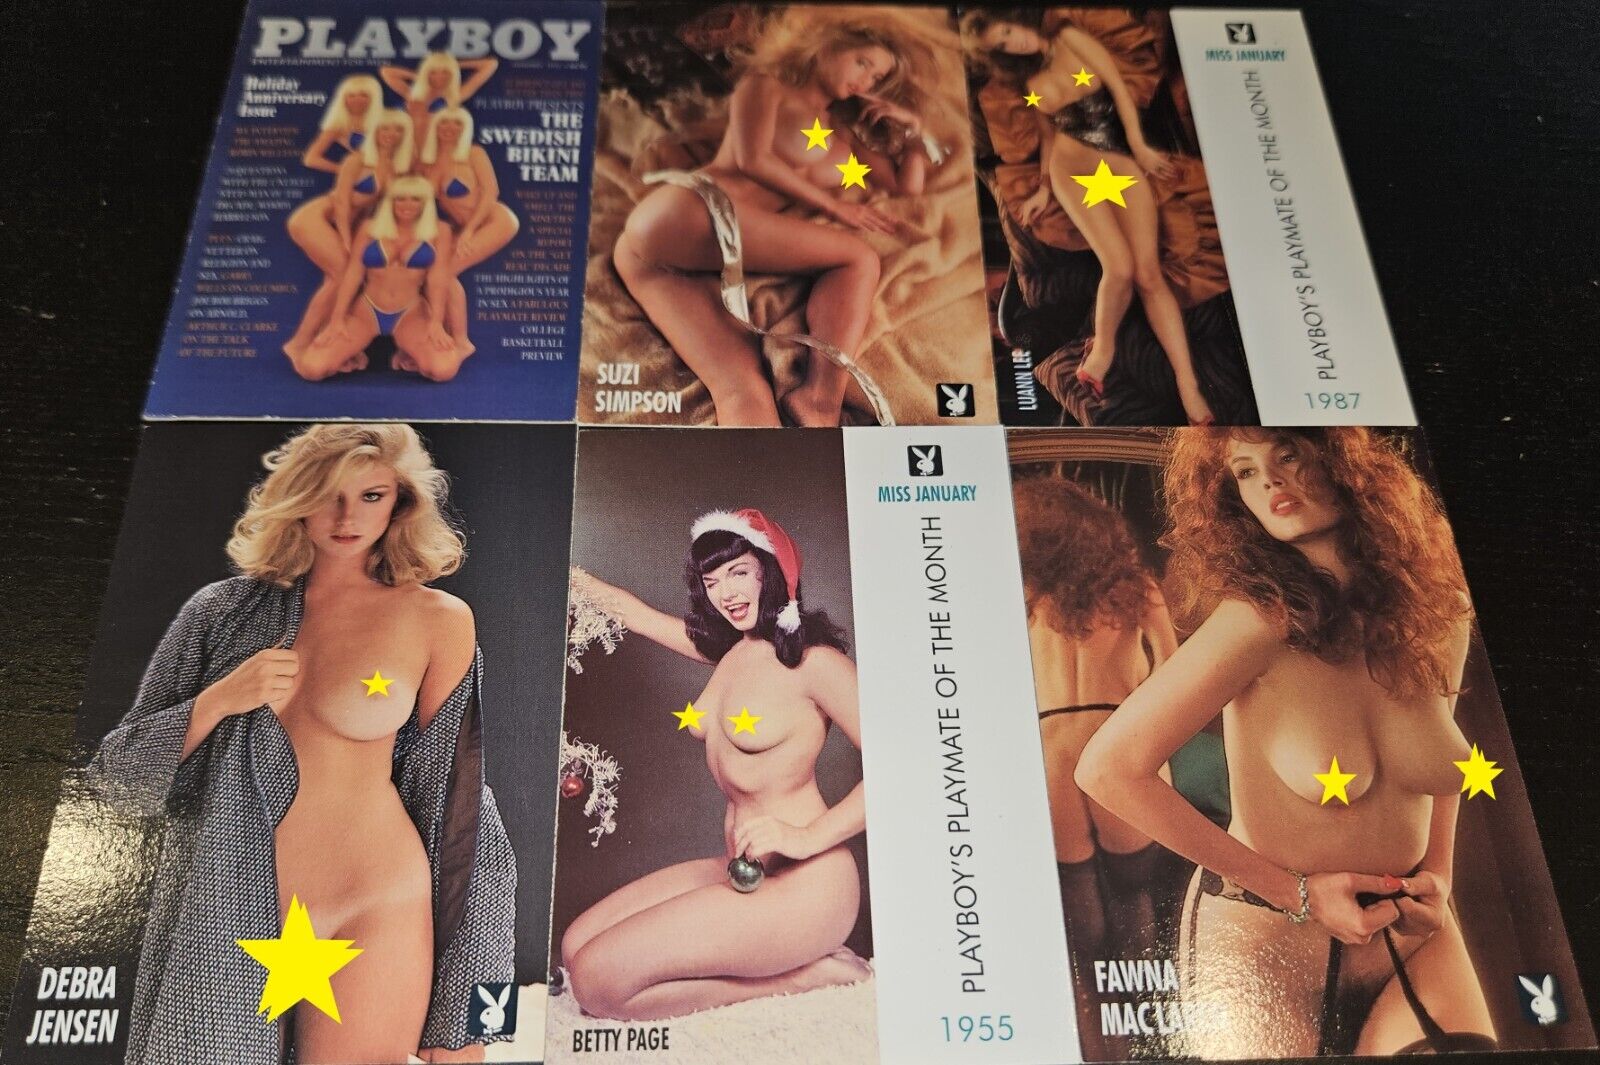 1993 Playboy Collector's Card Set of 6 Prototype Betti Page Swedish Bikini Team